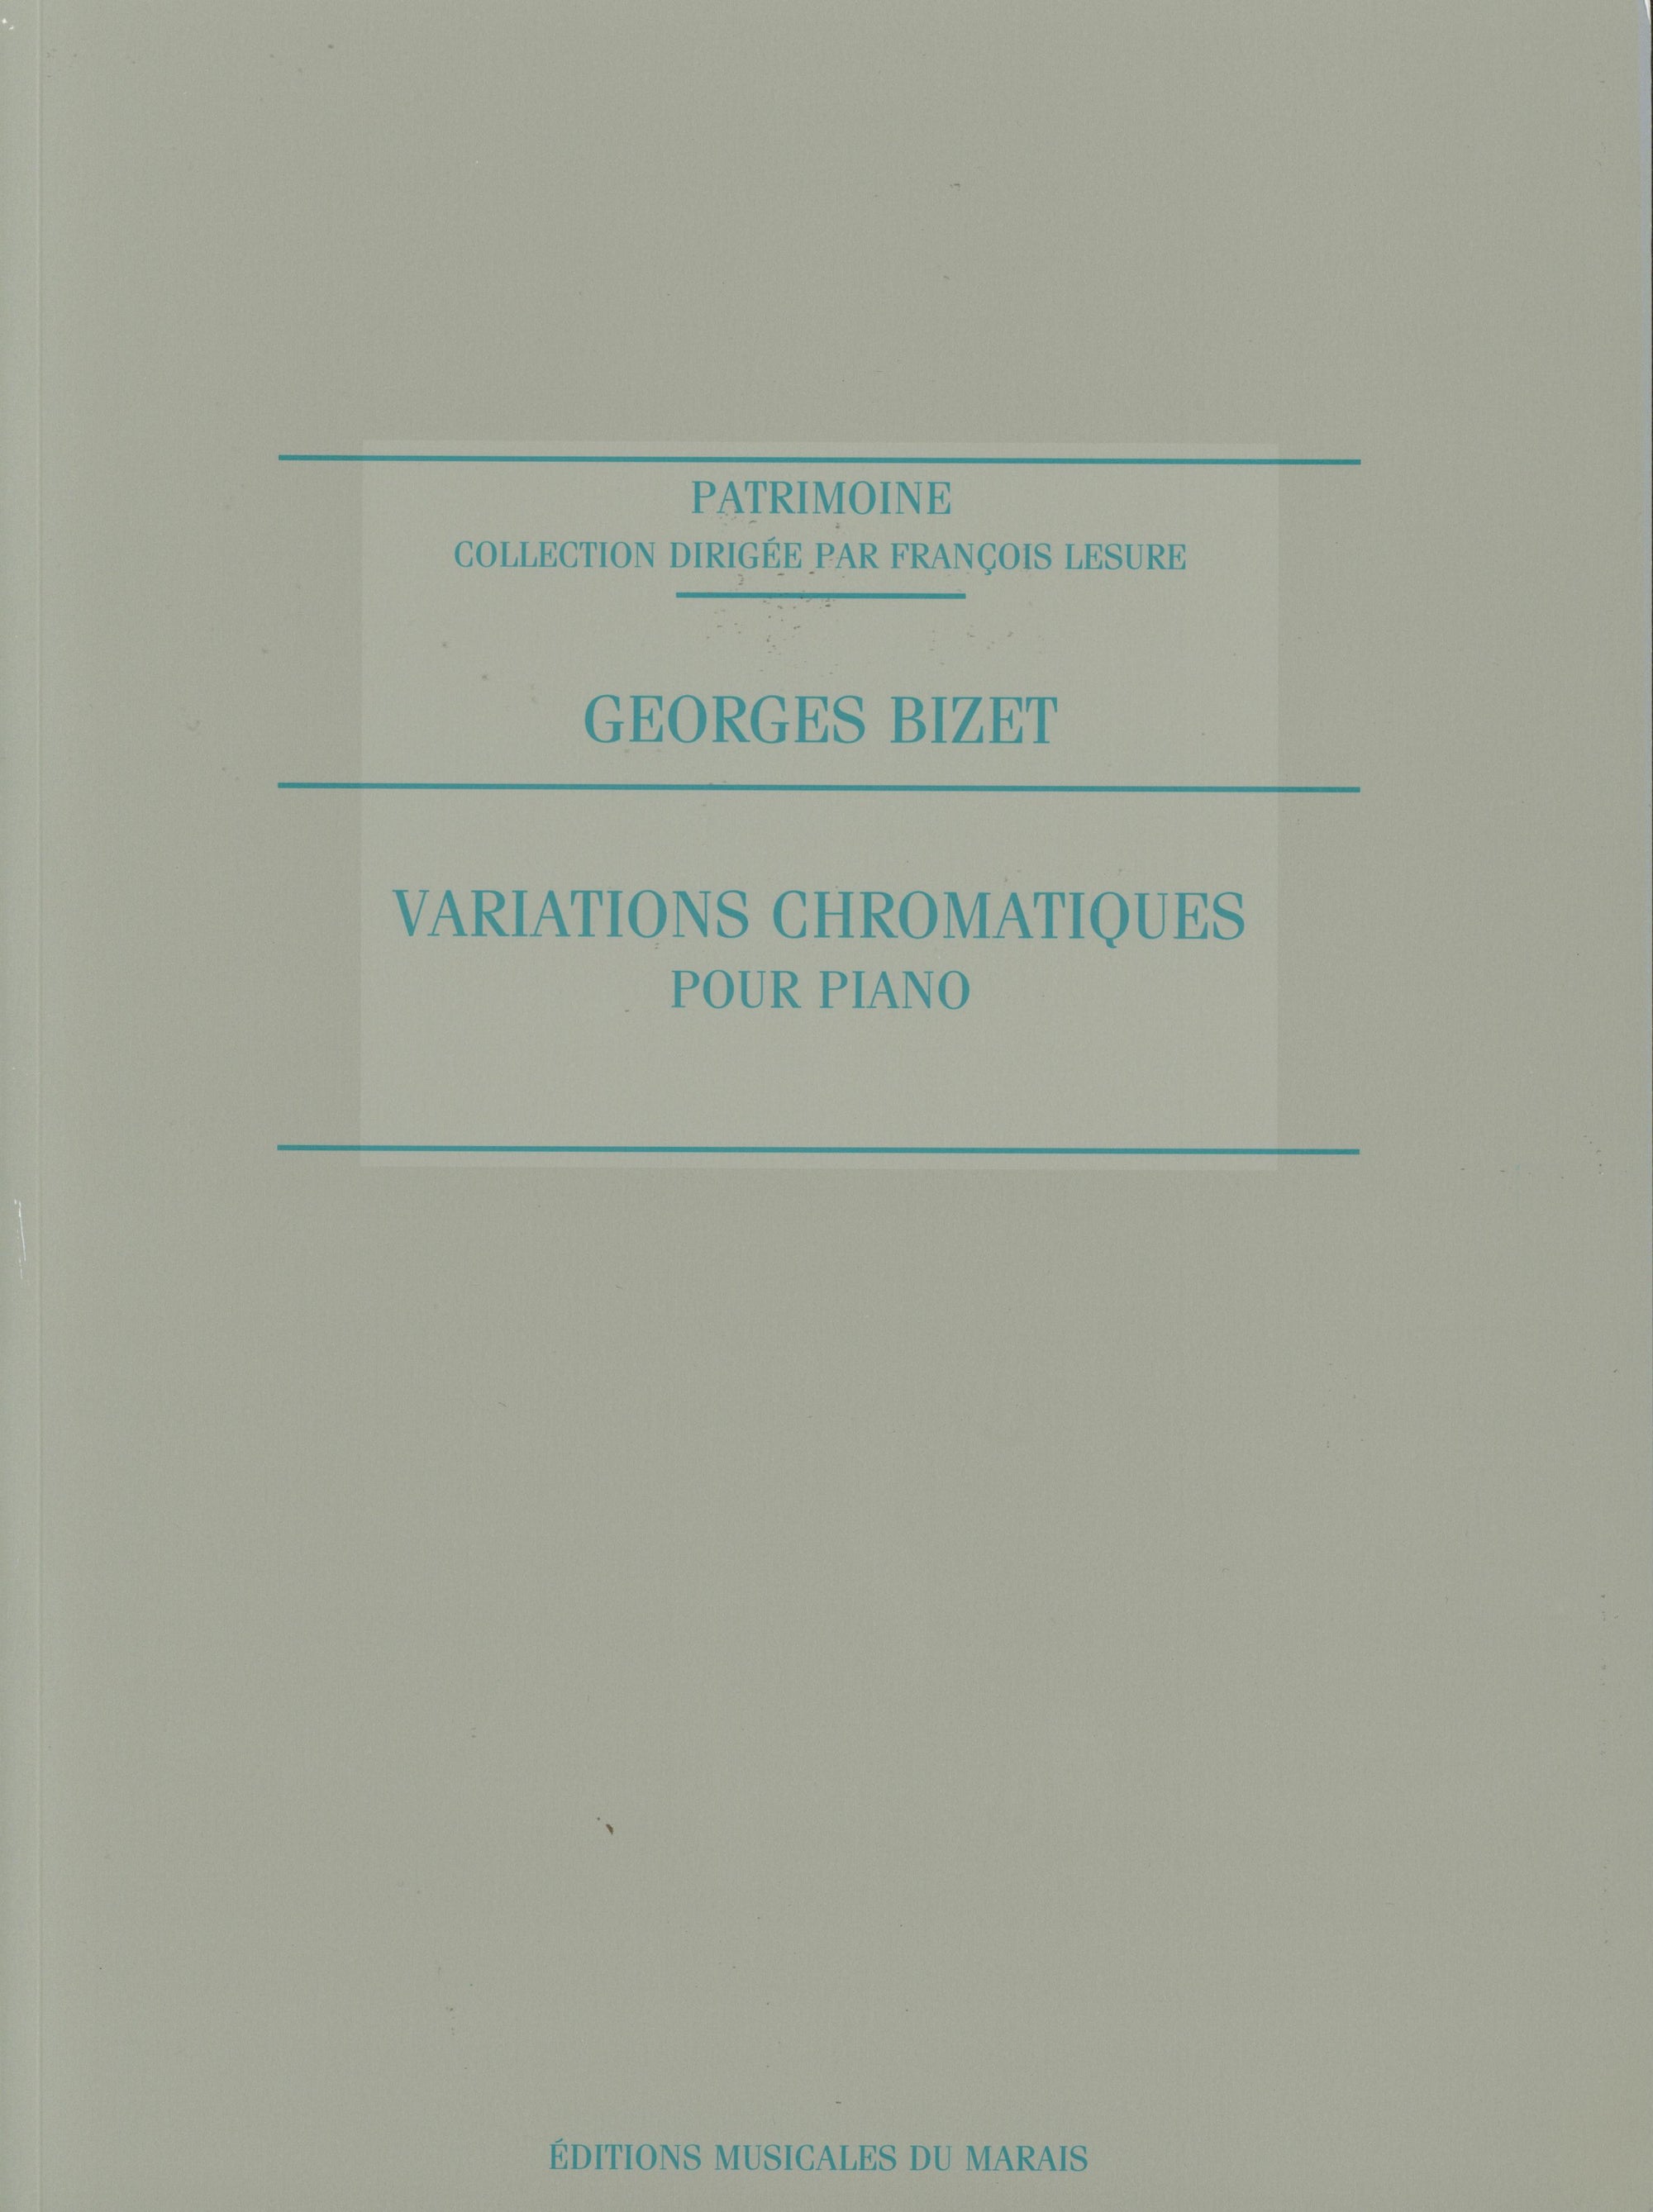 Bizet: Variations Chromatiques